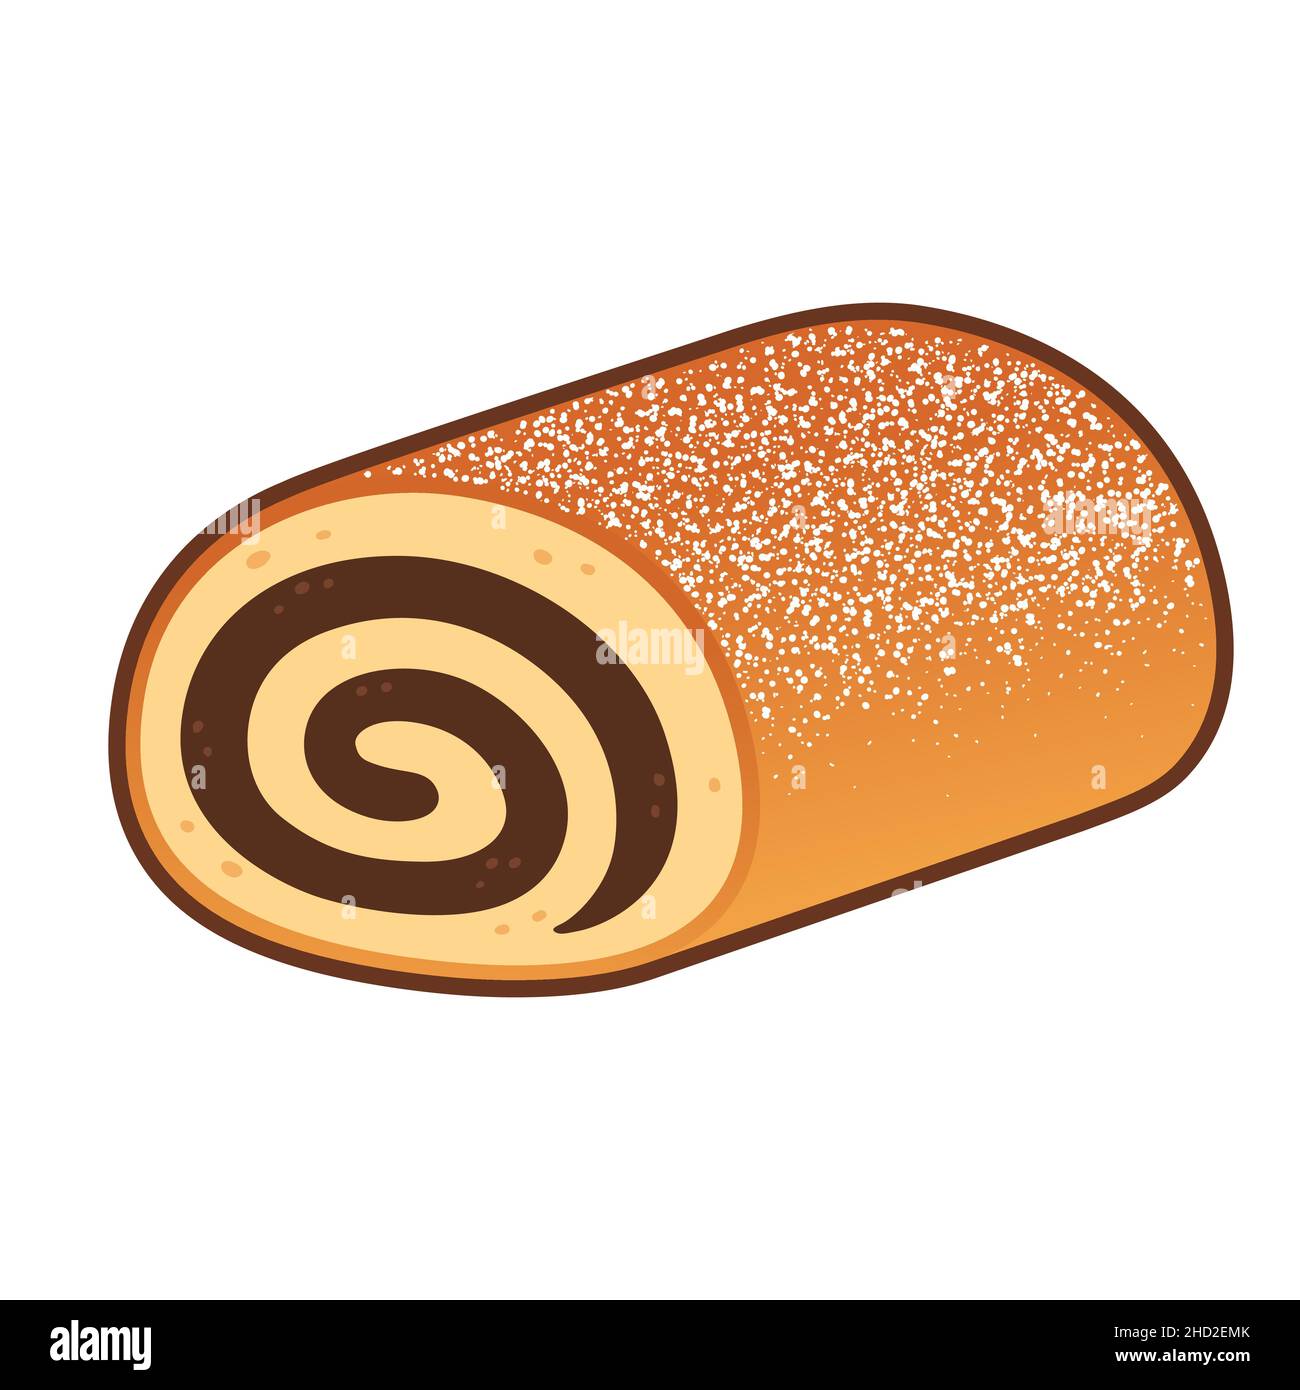 Pan dulce dibujo fotografías e imágenes de alta resolución - Alamy